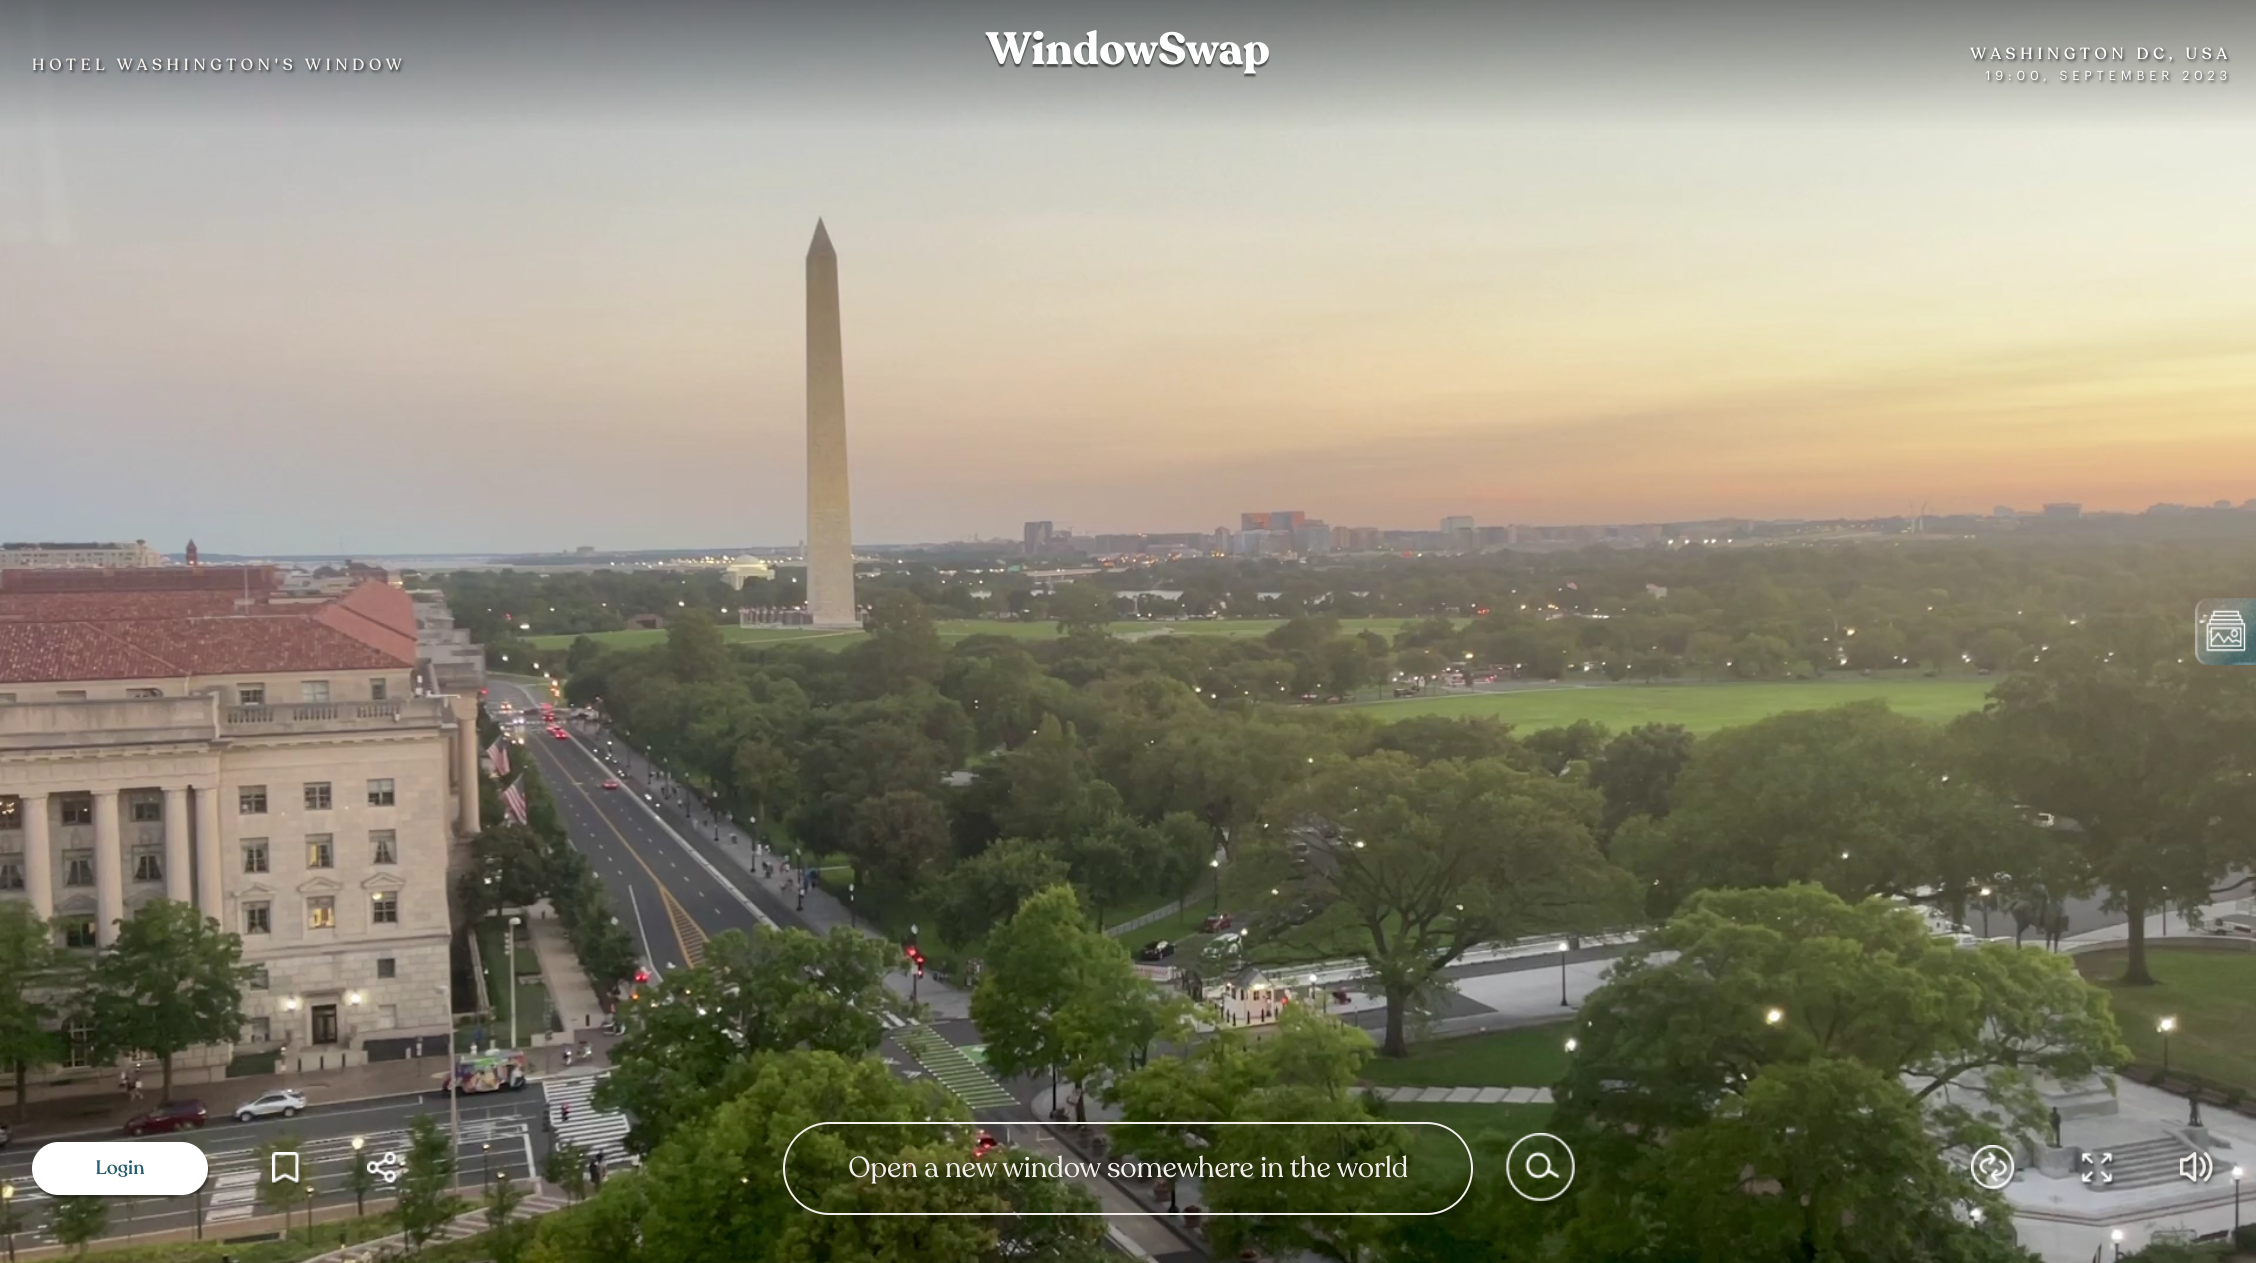 WindowSwap view of the Washington Monument